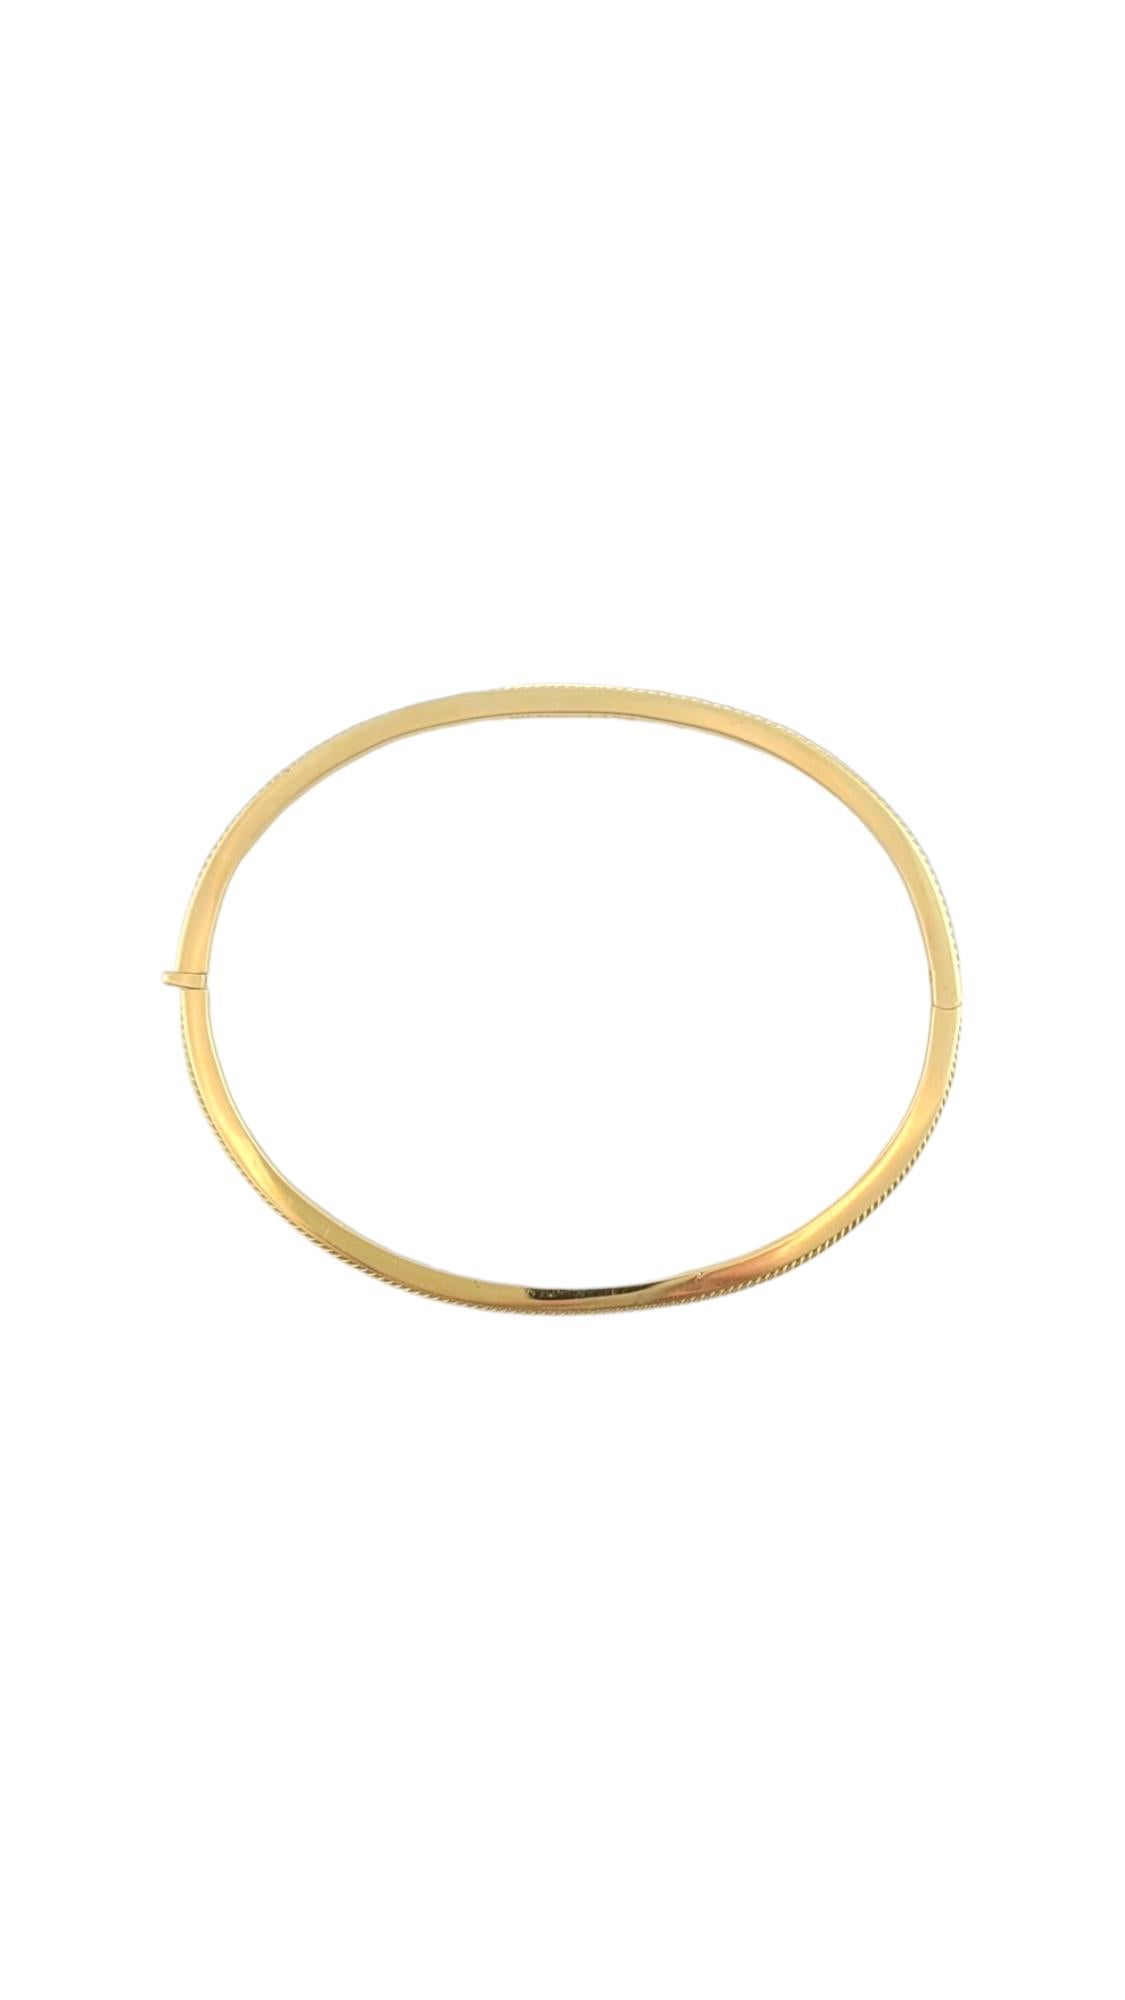 Hidalgo 18K Yellow Gold Oval Rope Accented Bangle Bracelet #16087 1